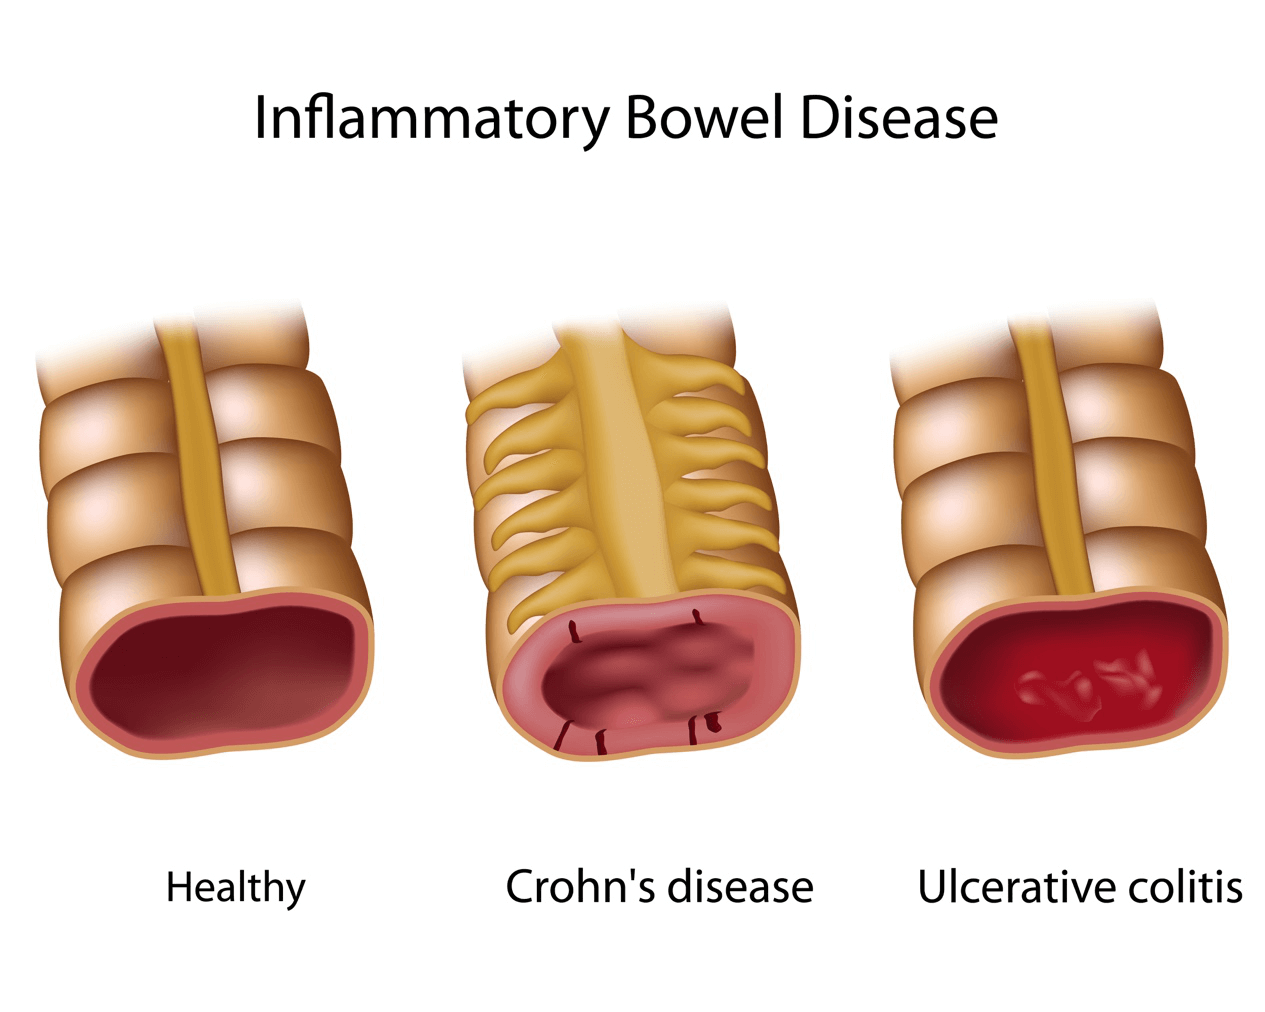 Inflammatory bowel diseases